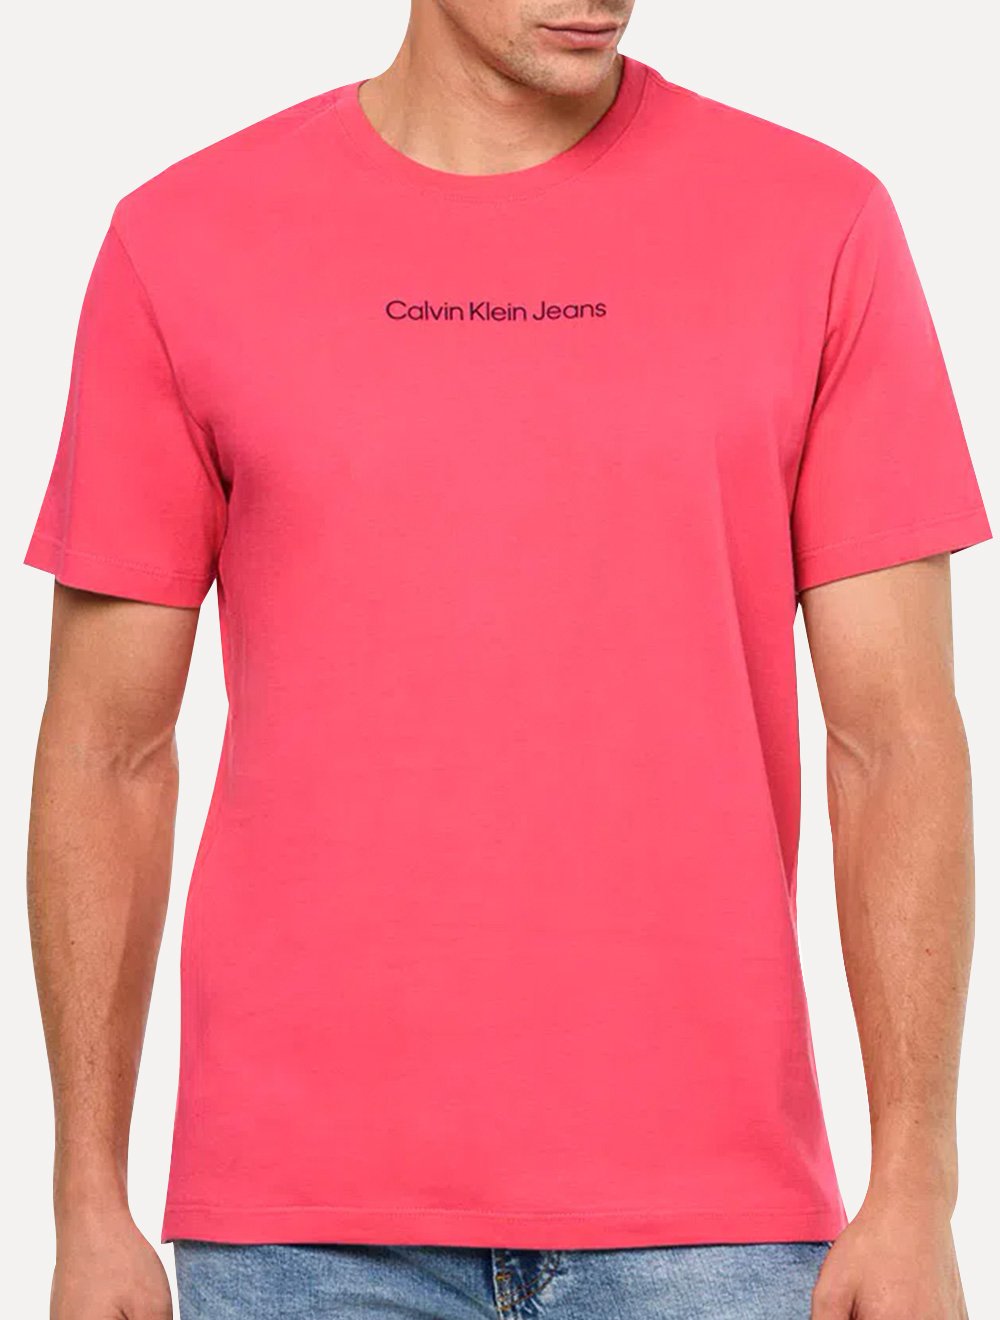 Camiseta Calvin Klein Jeans Masculina Institutional New Logo Rosa